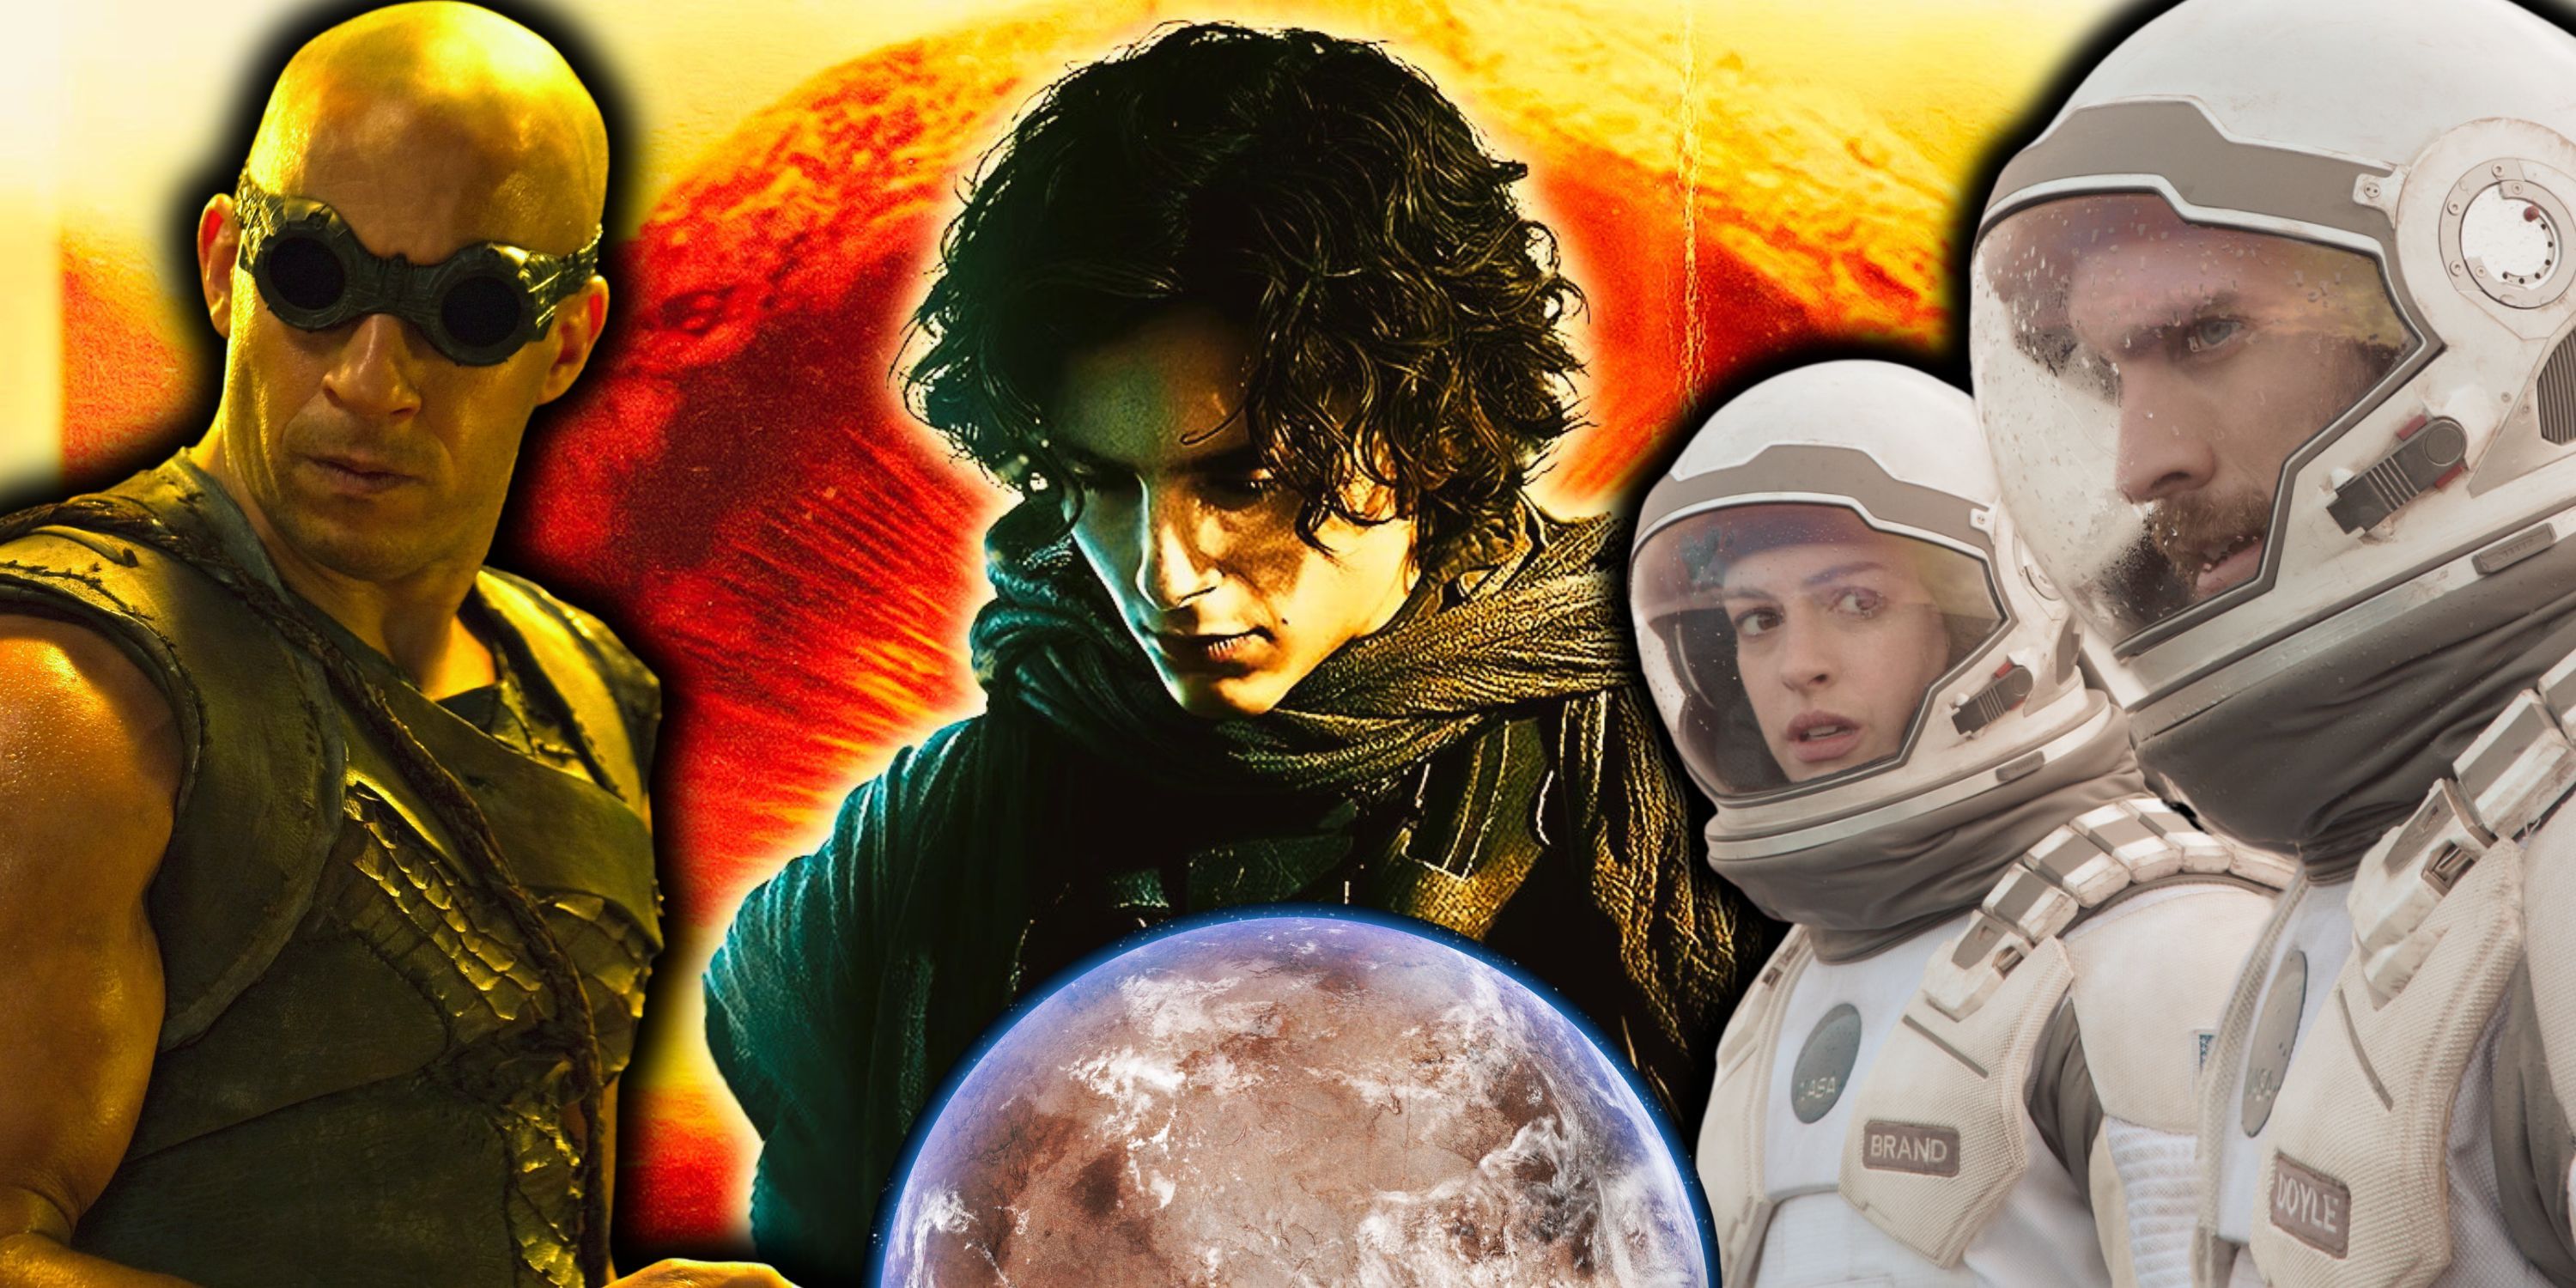 Composite image Riddick, Paul Atreides, Tatooine, Interstellar astronauts